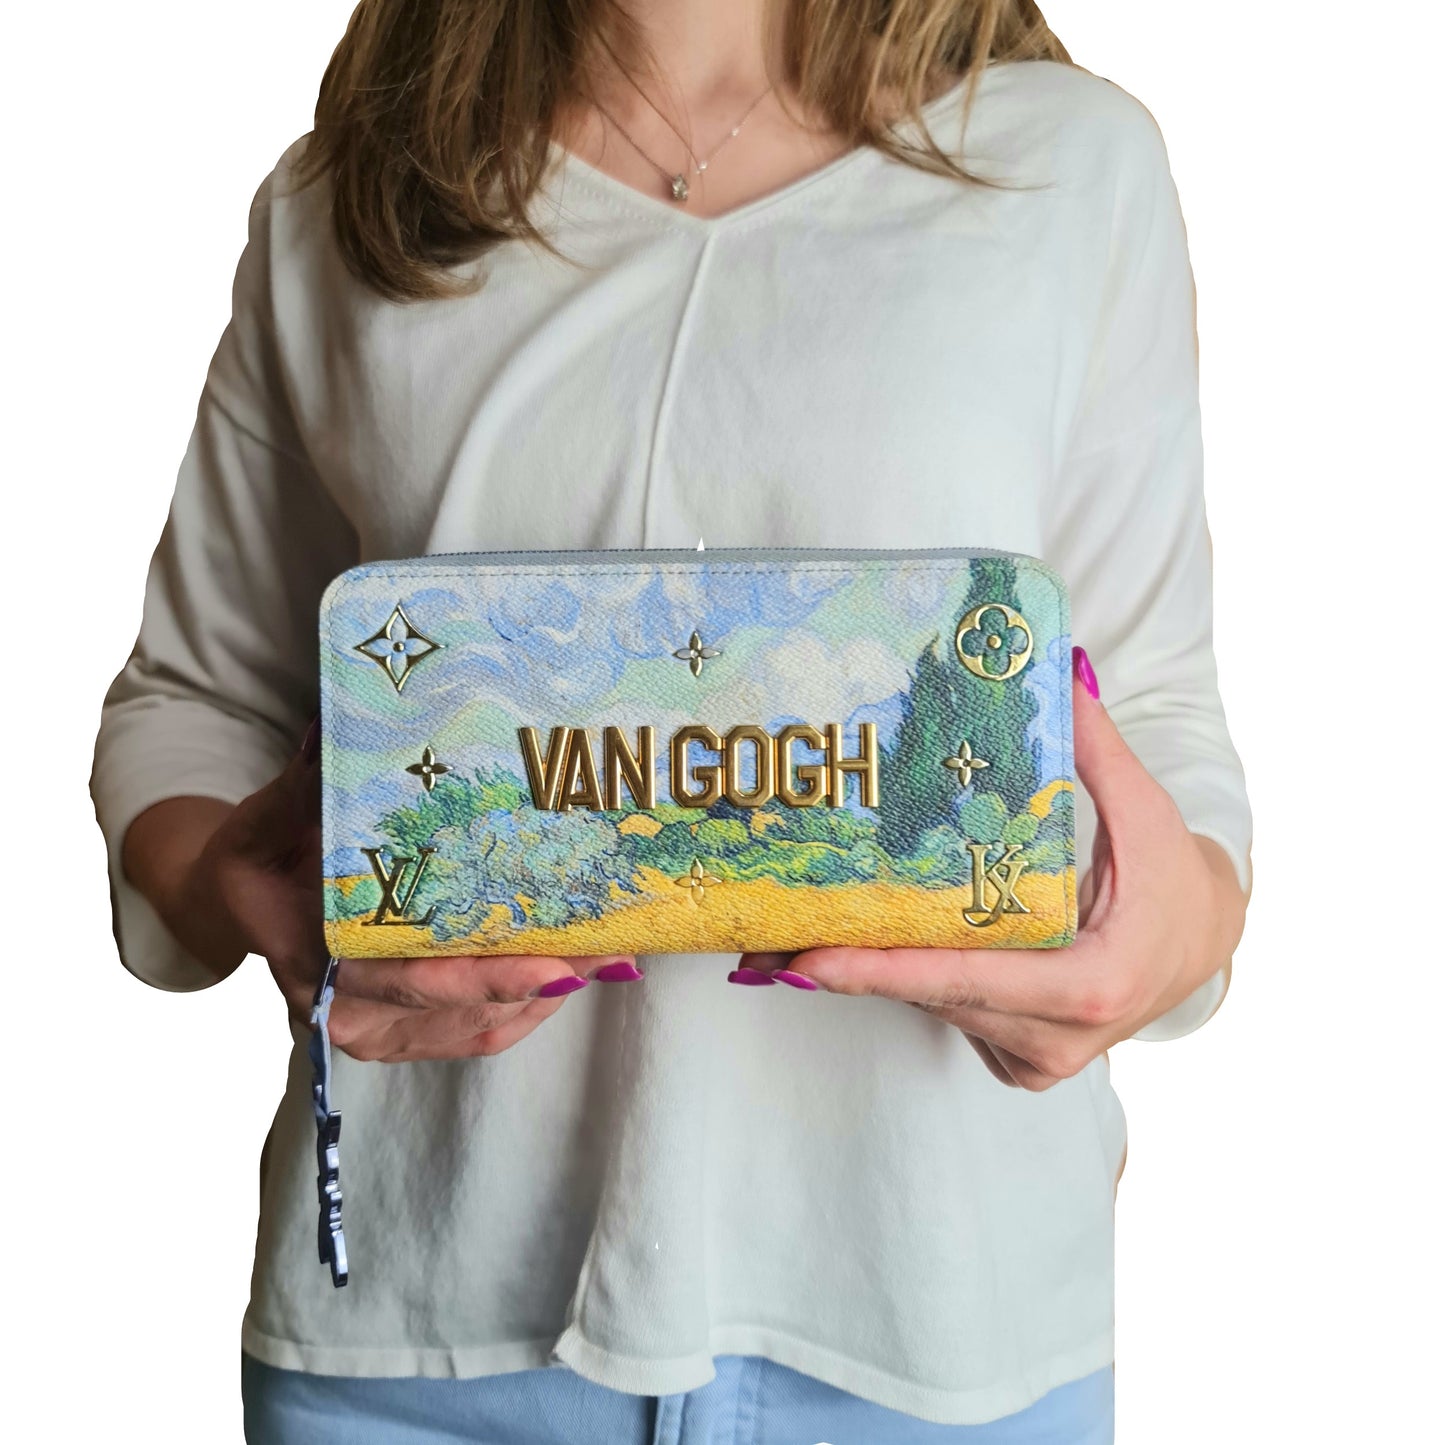 Louis Vuitton Masters Collection Van Gogh Zippy Wallet (769